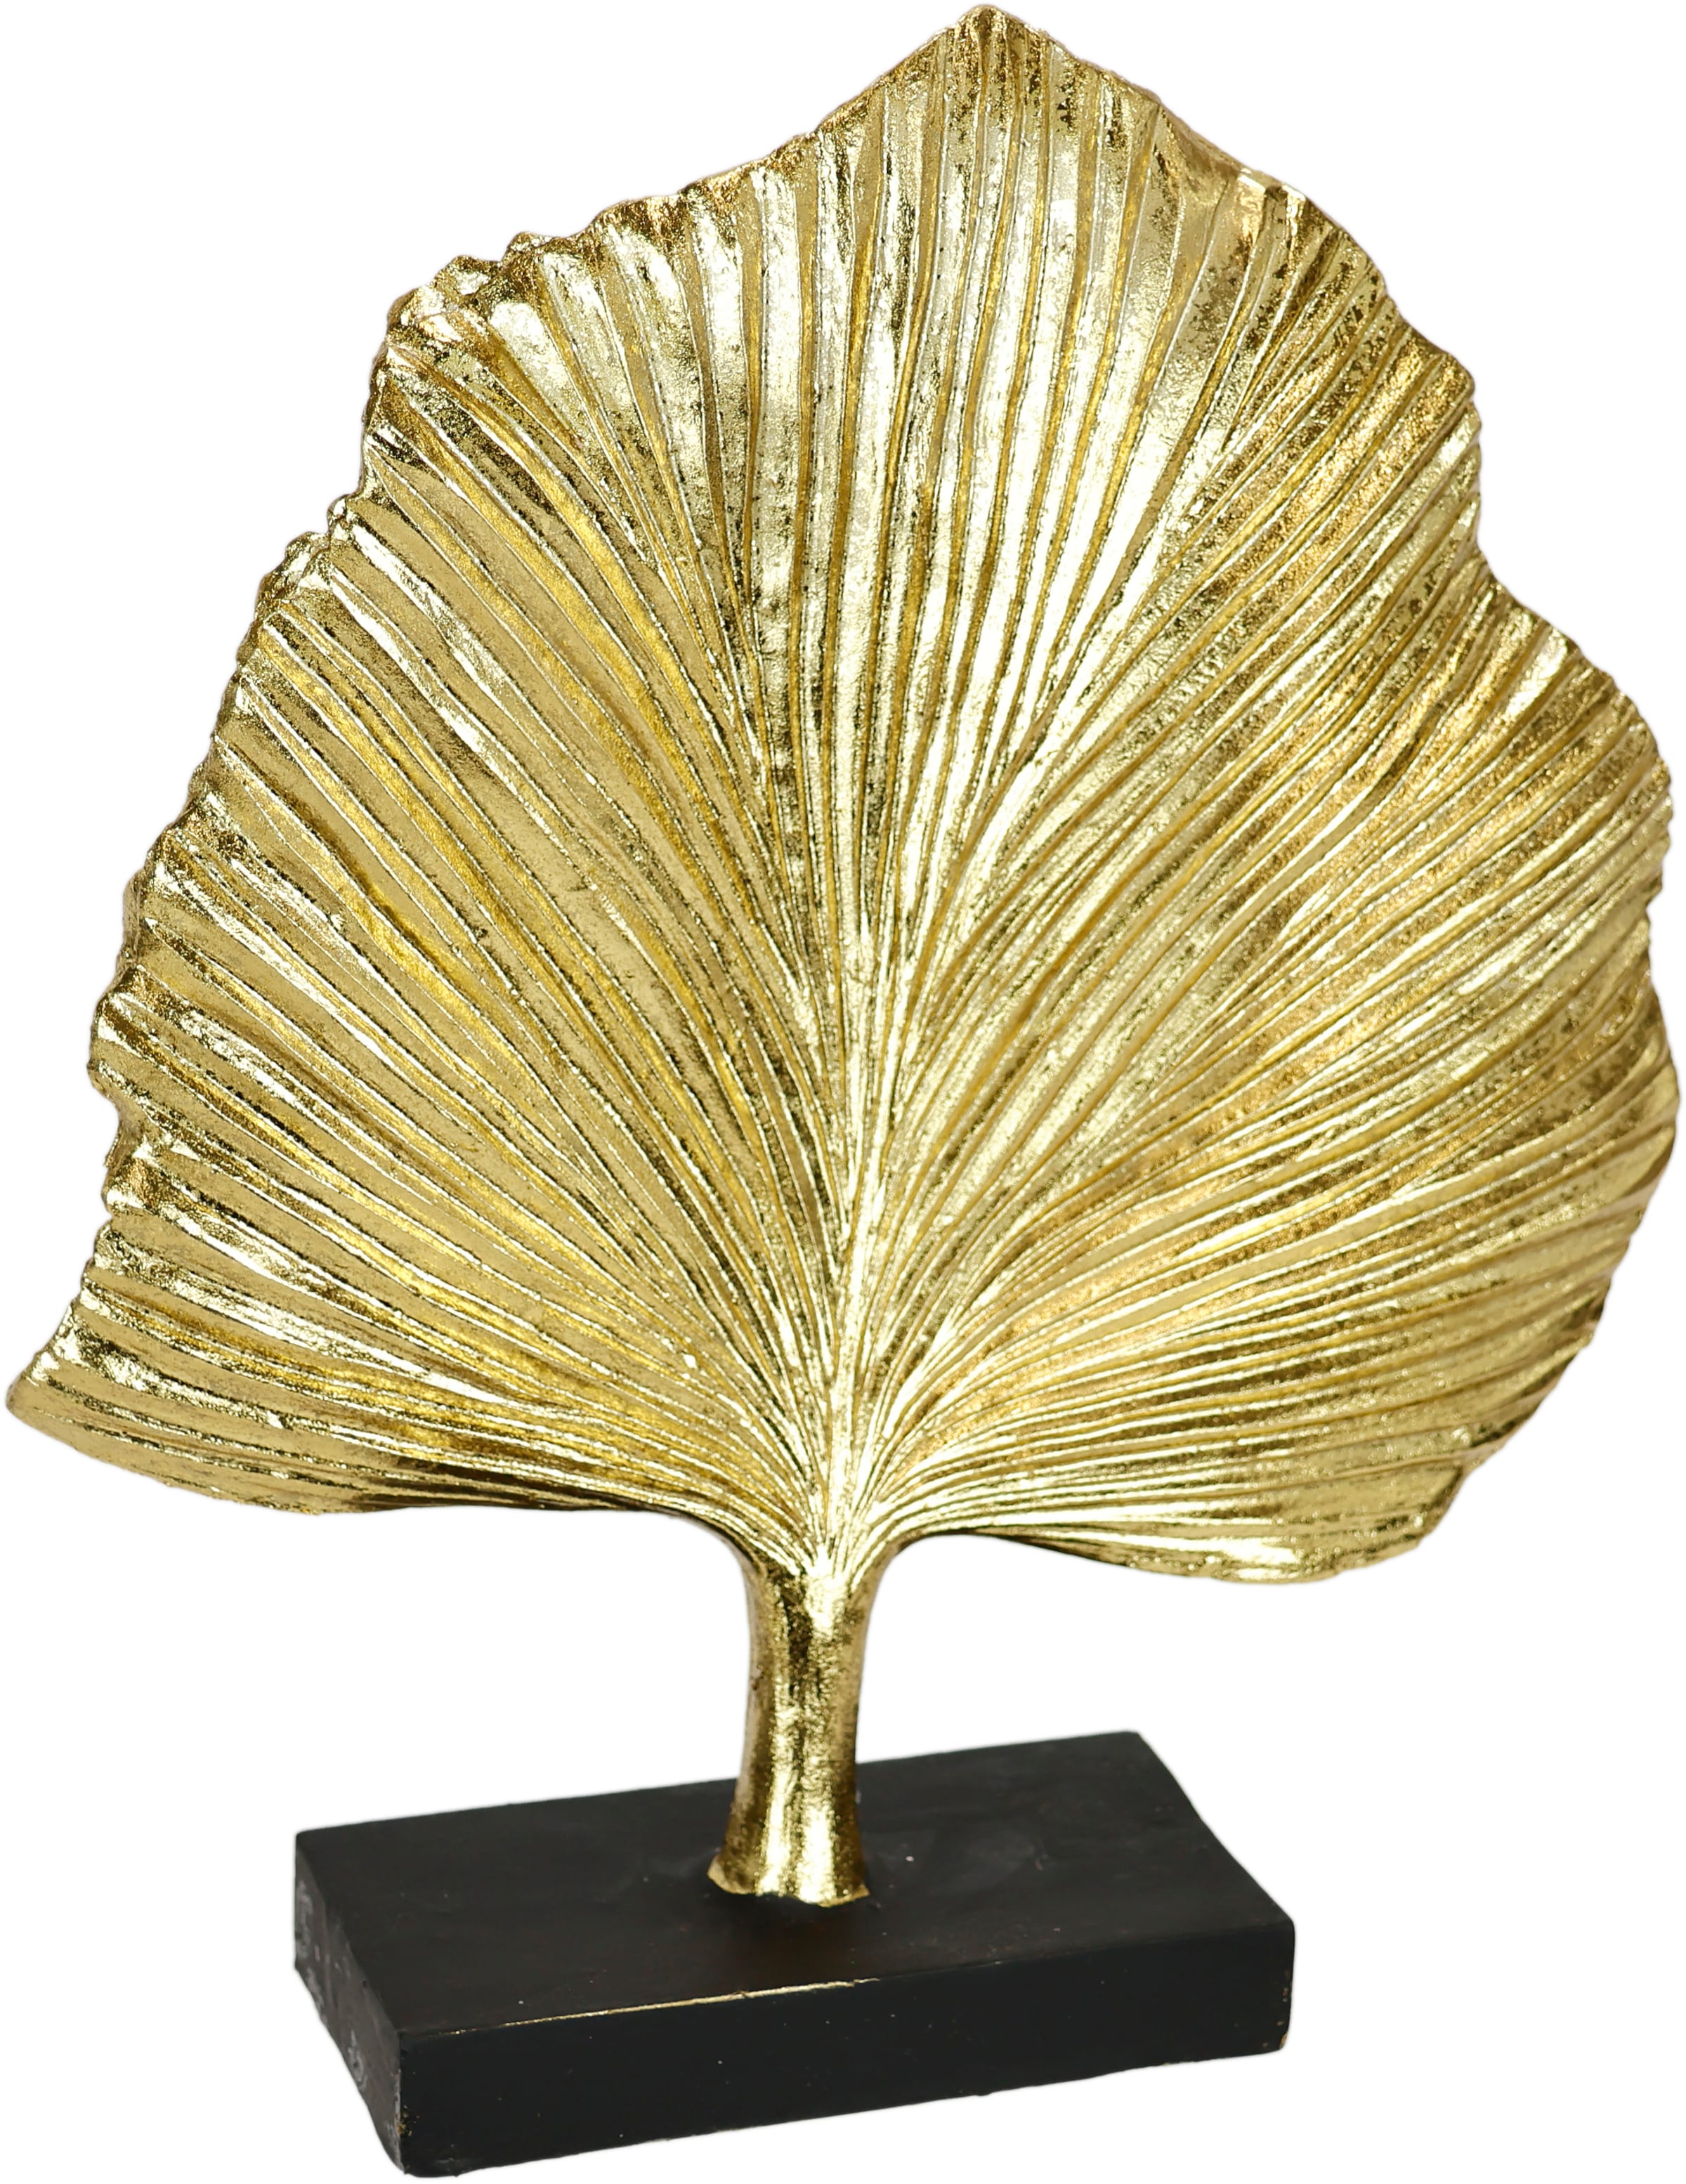 I.GE.A. Dekofigur »Ginkgo Blatt Statue«, Ornamente Skulptur Dekoration Figuren Geschenkidee, gold